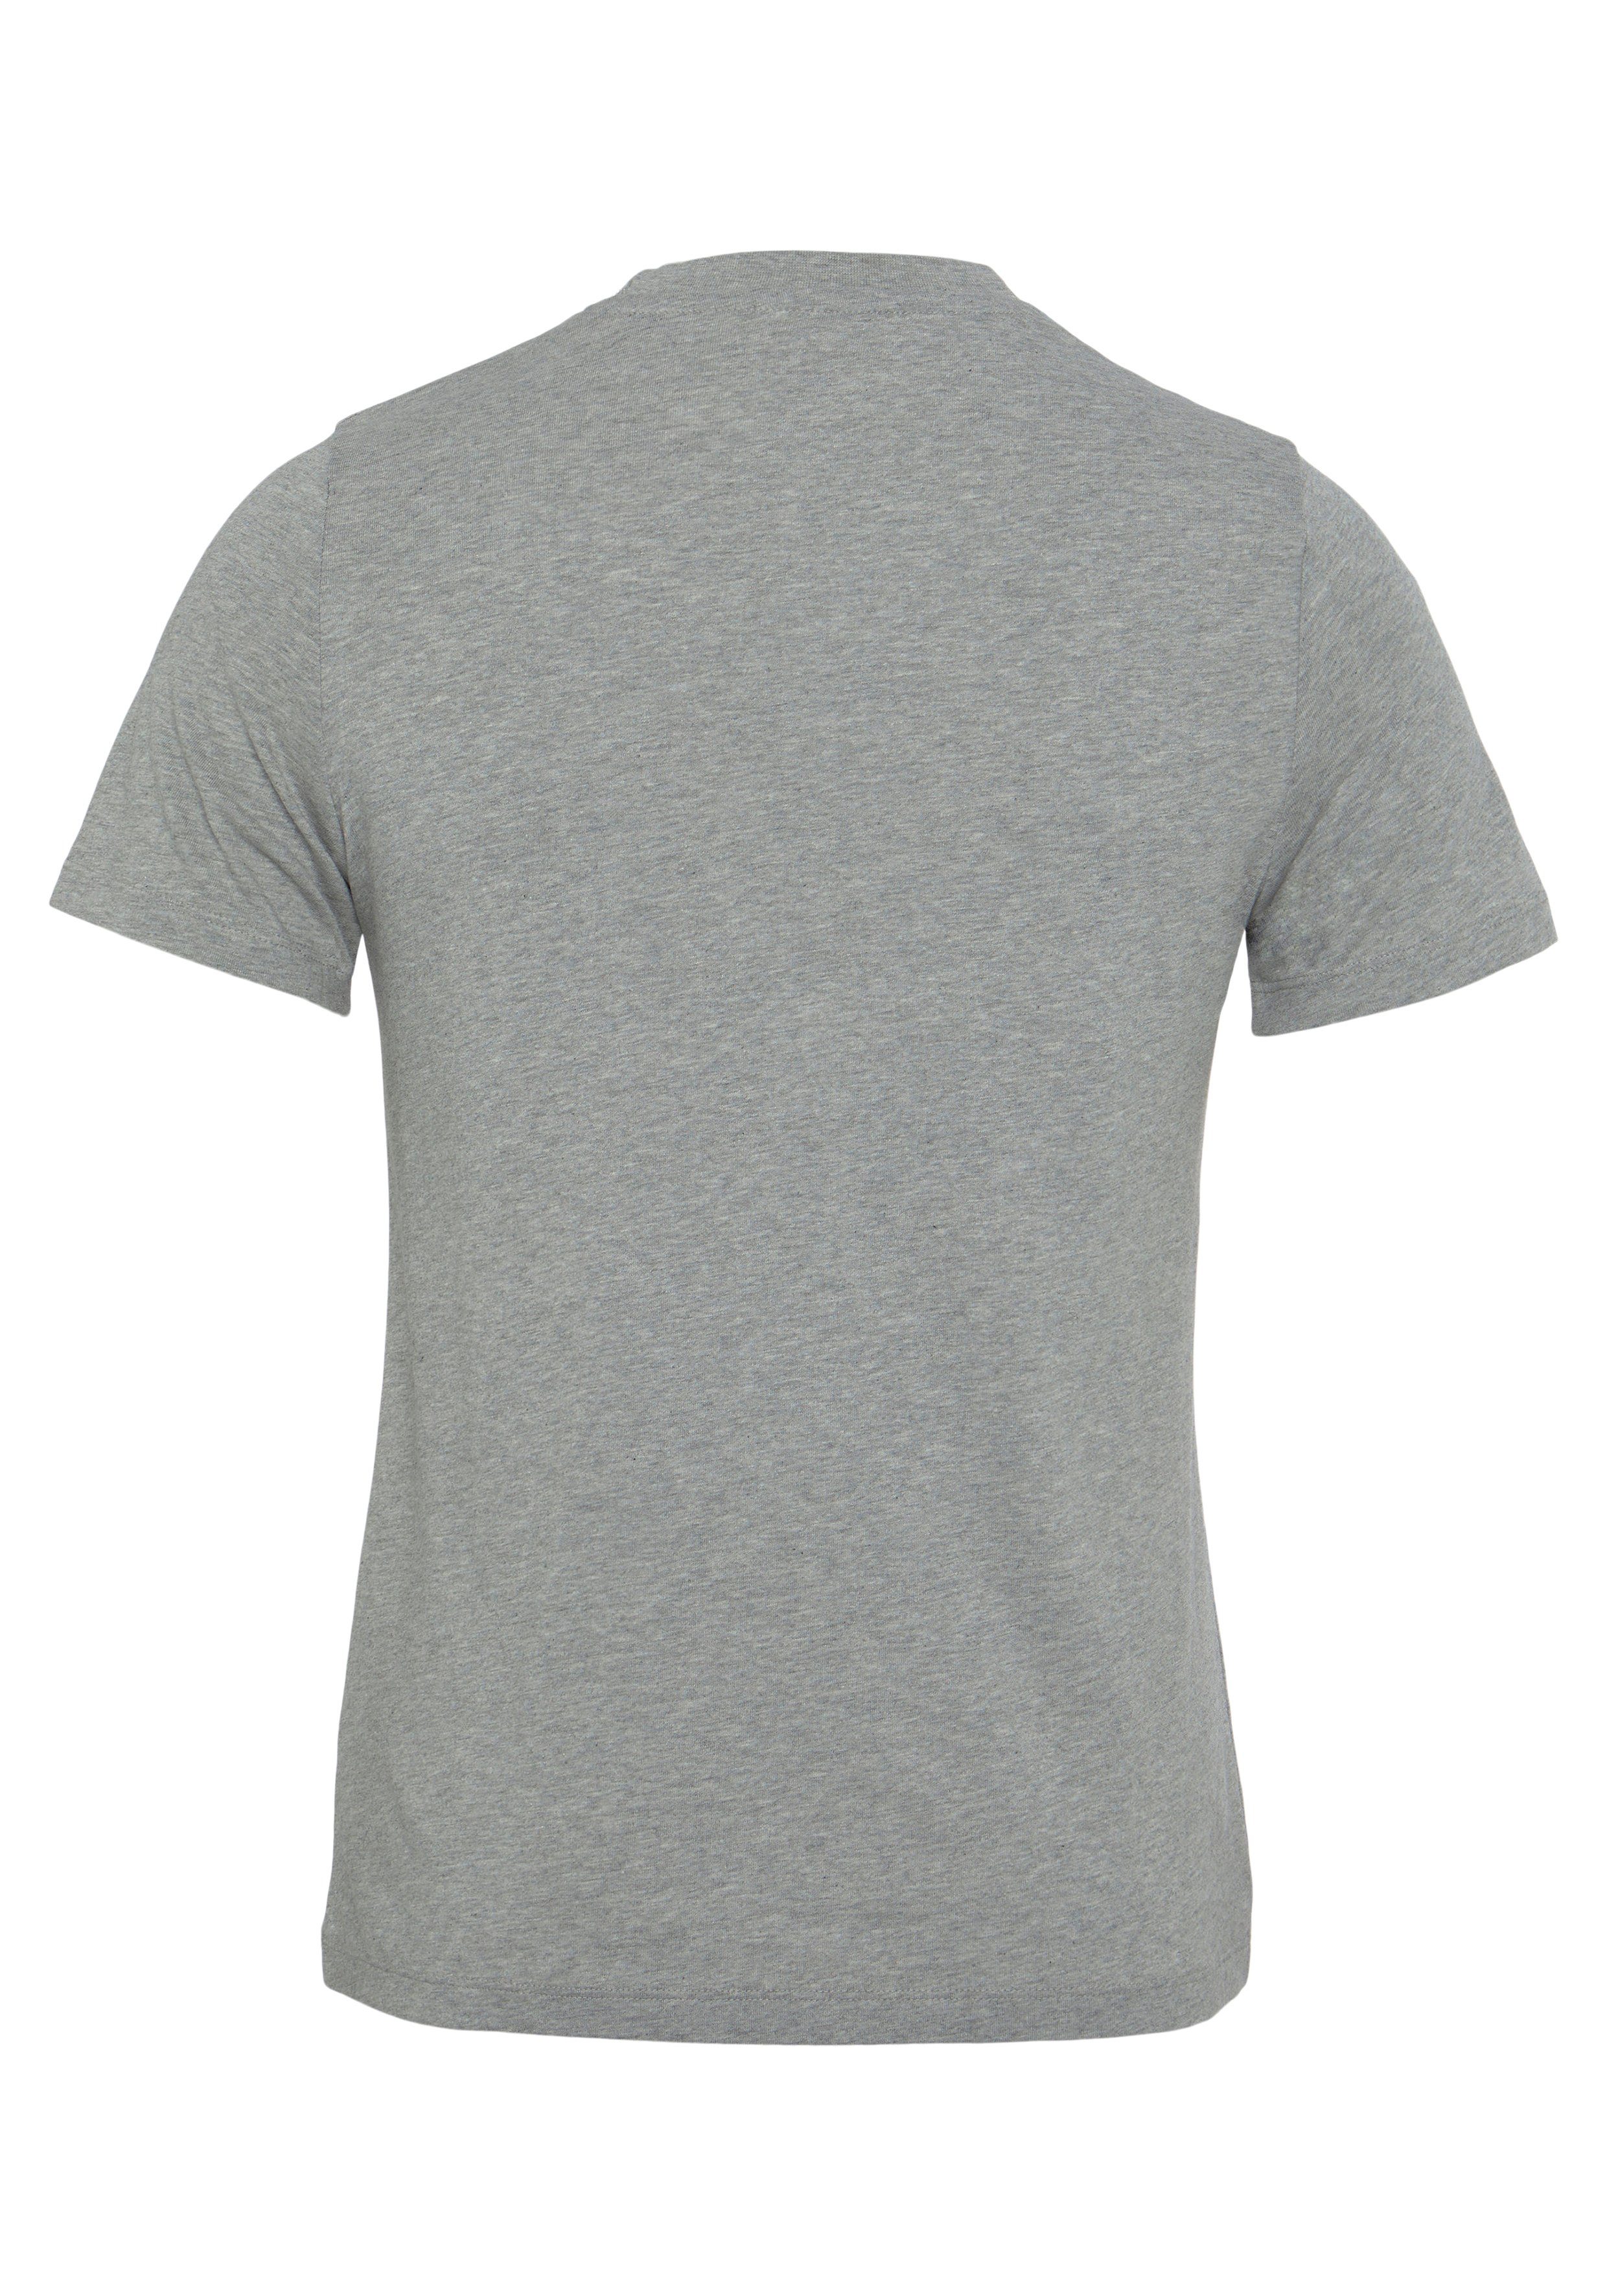 Read Reebok medium Tee grey Reebok heather Graphic T-Shirt